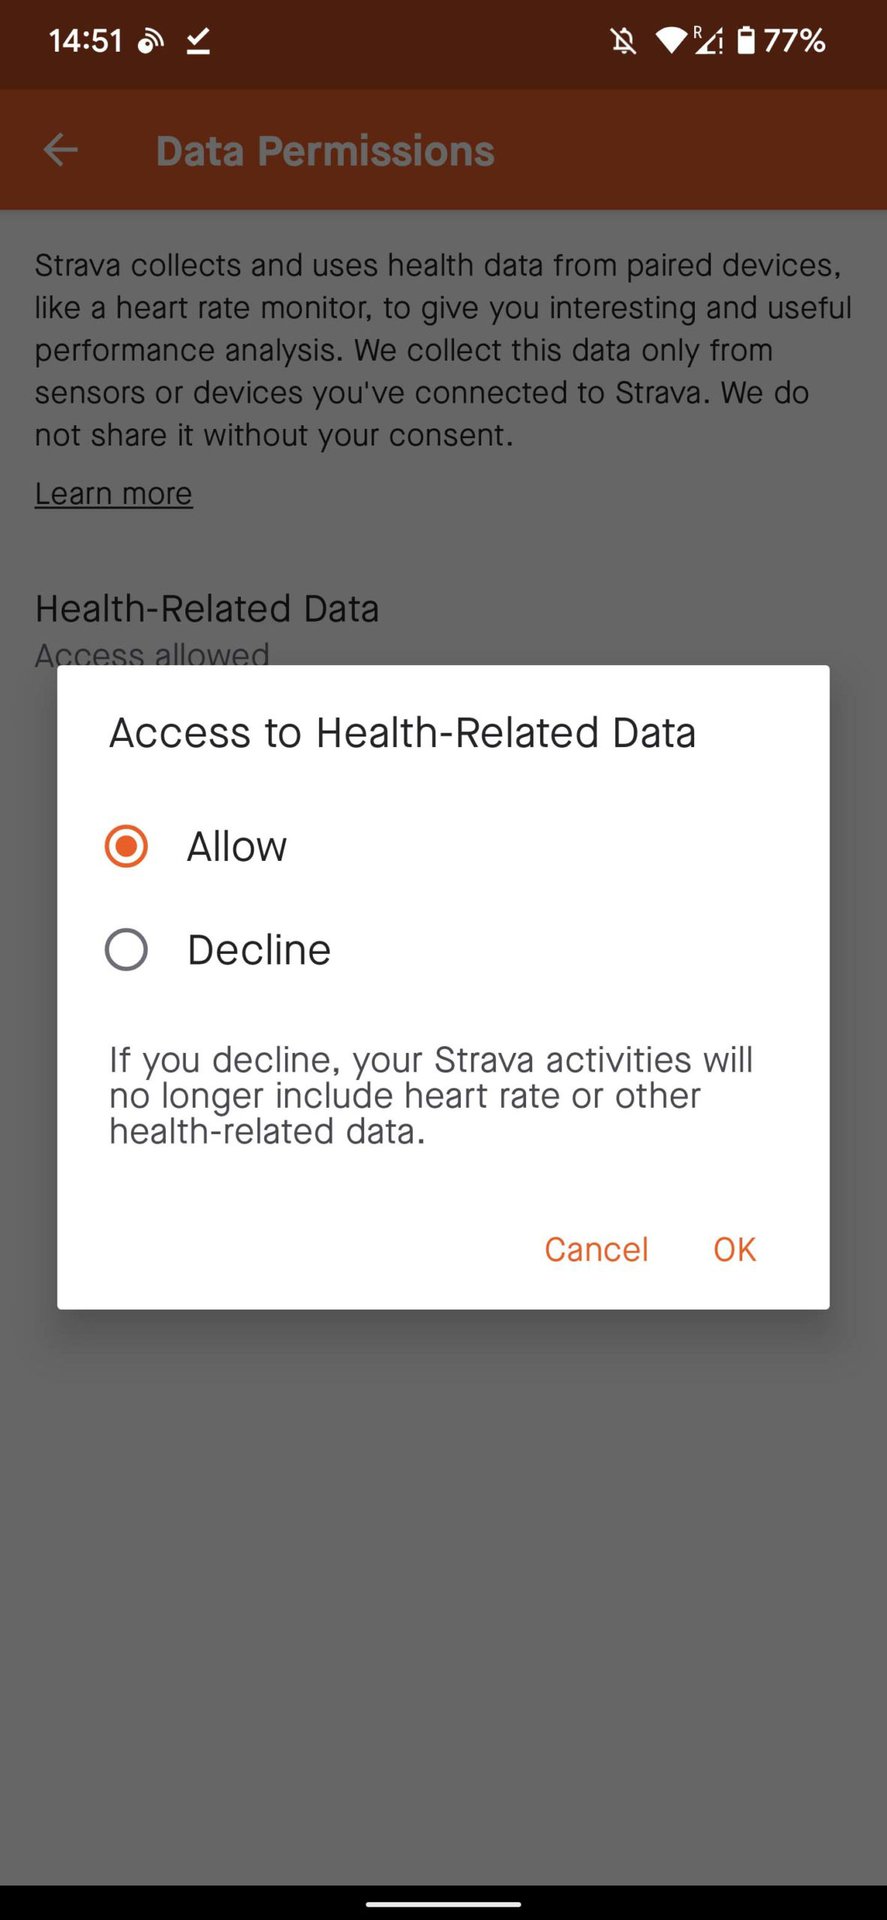 Strava allow health related data sharing